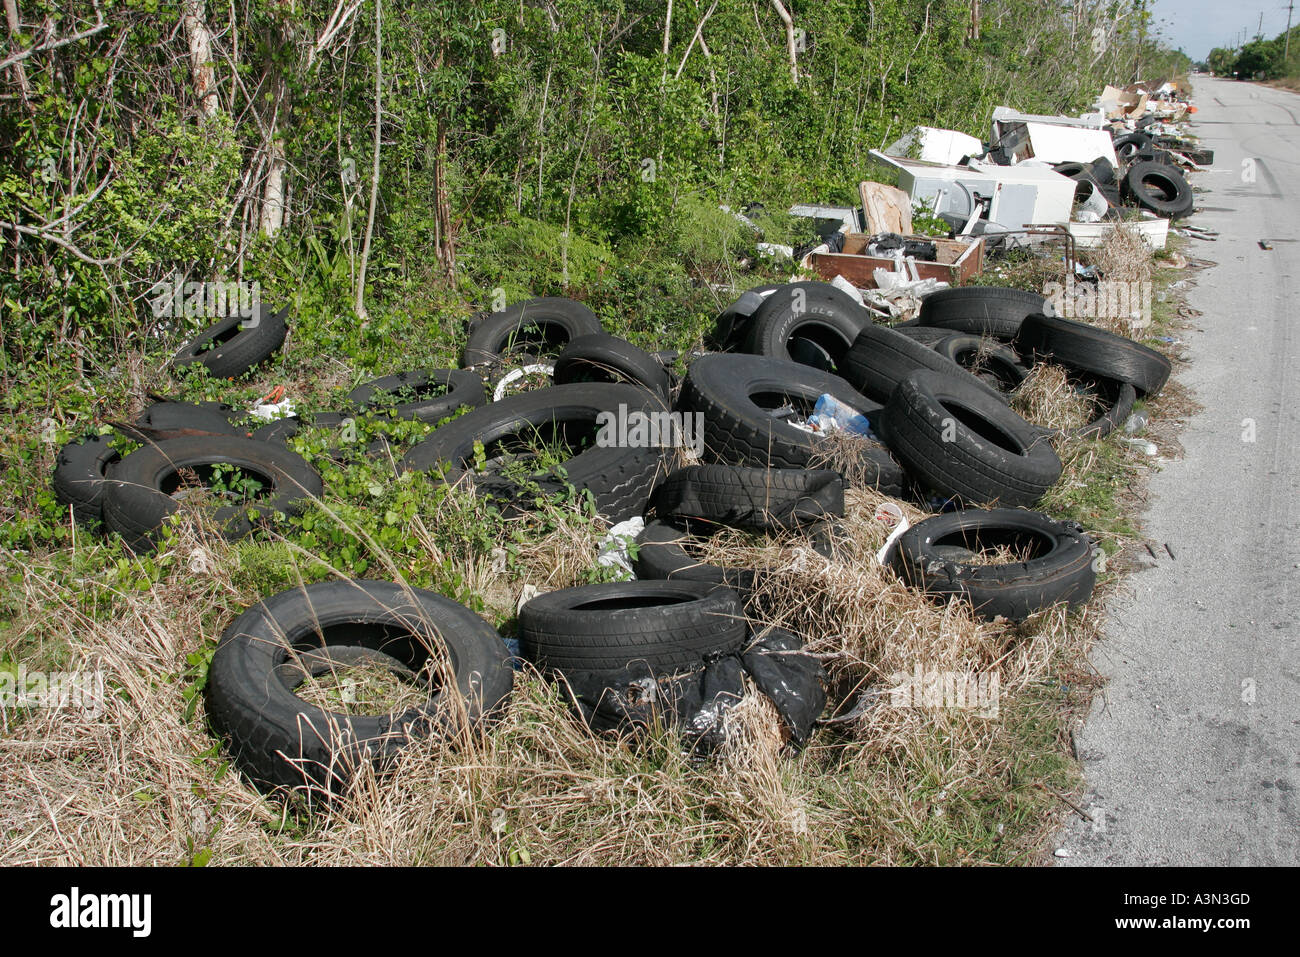 Miami Florida,Homestead,illegal dumping site,roadside,tires,appliances,trash,pollution,litter,trash,pollution,clutter,trash,FL060130443 Stock Photo